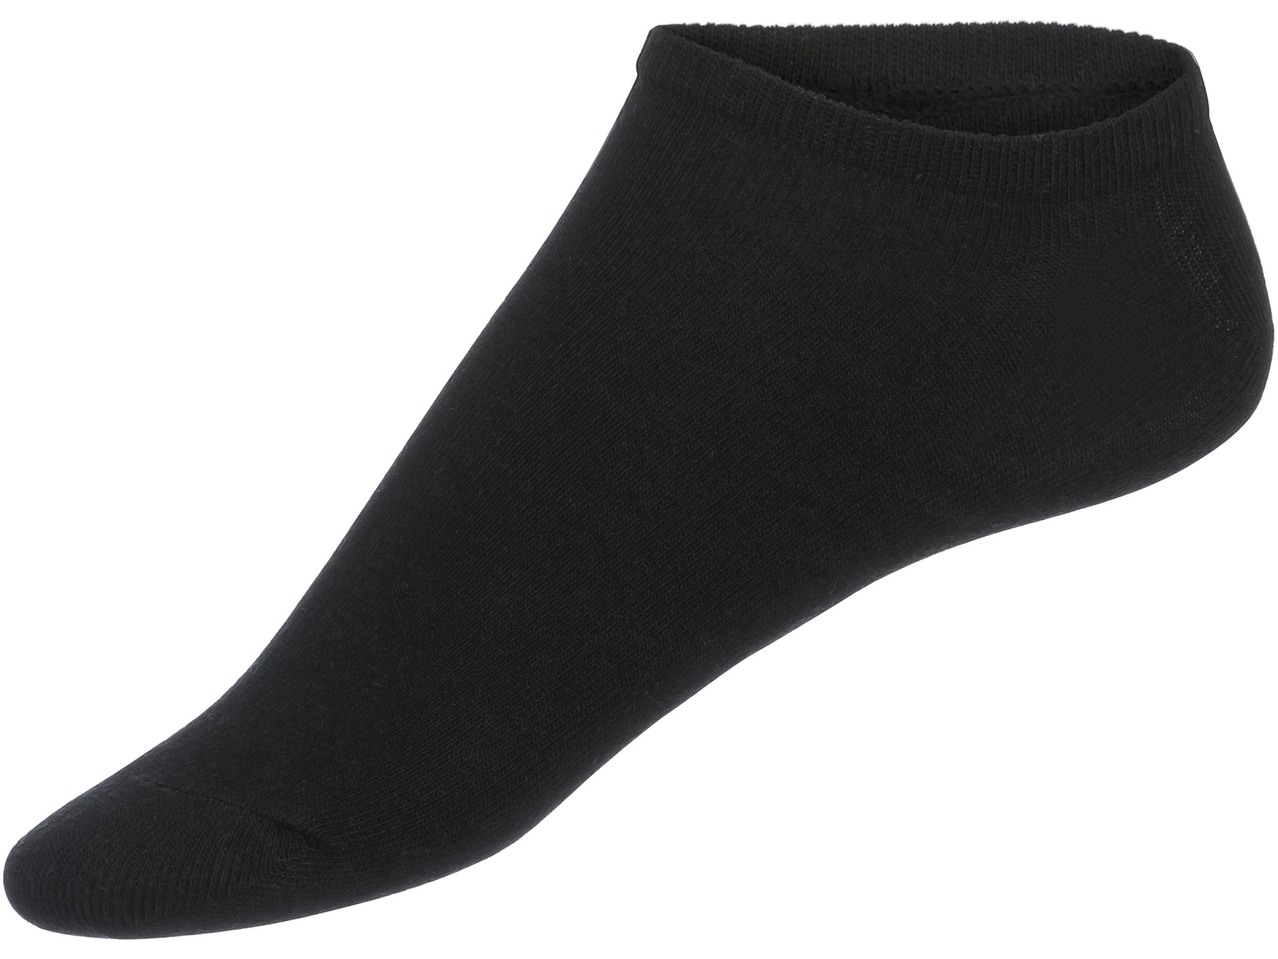 Ladies' Trainer Socks, 5 pairs